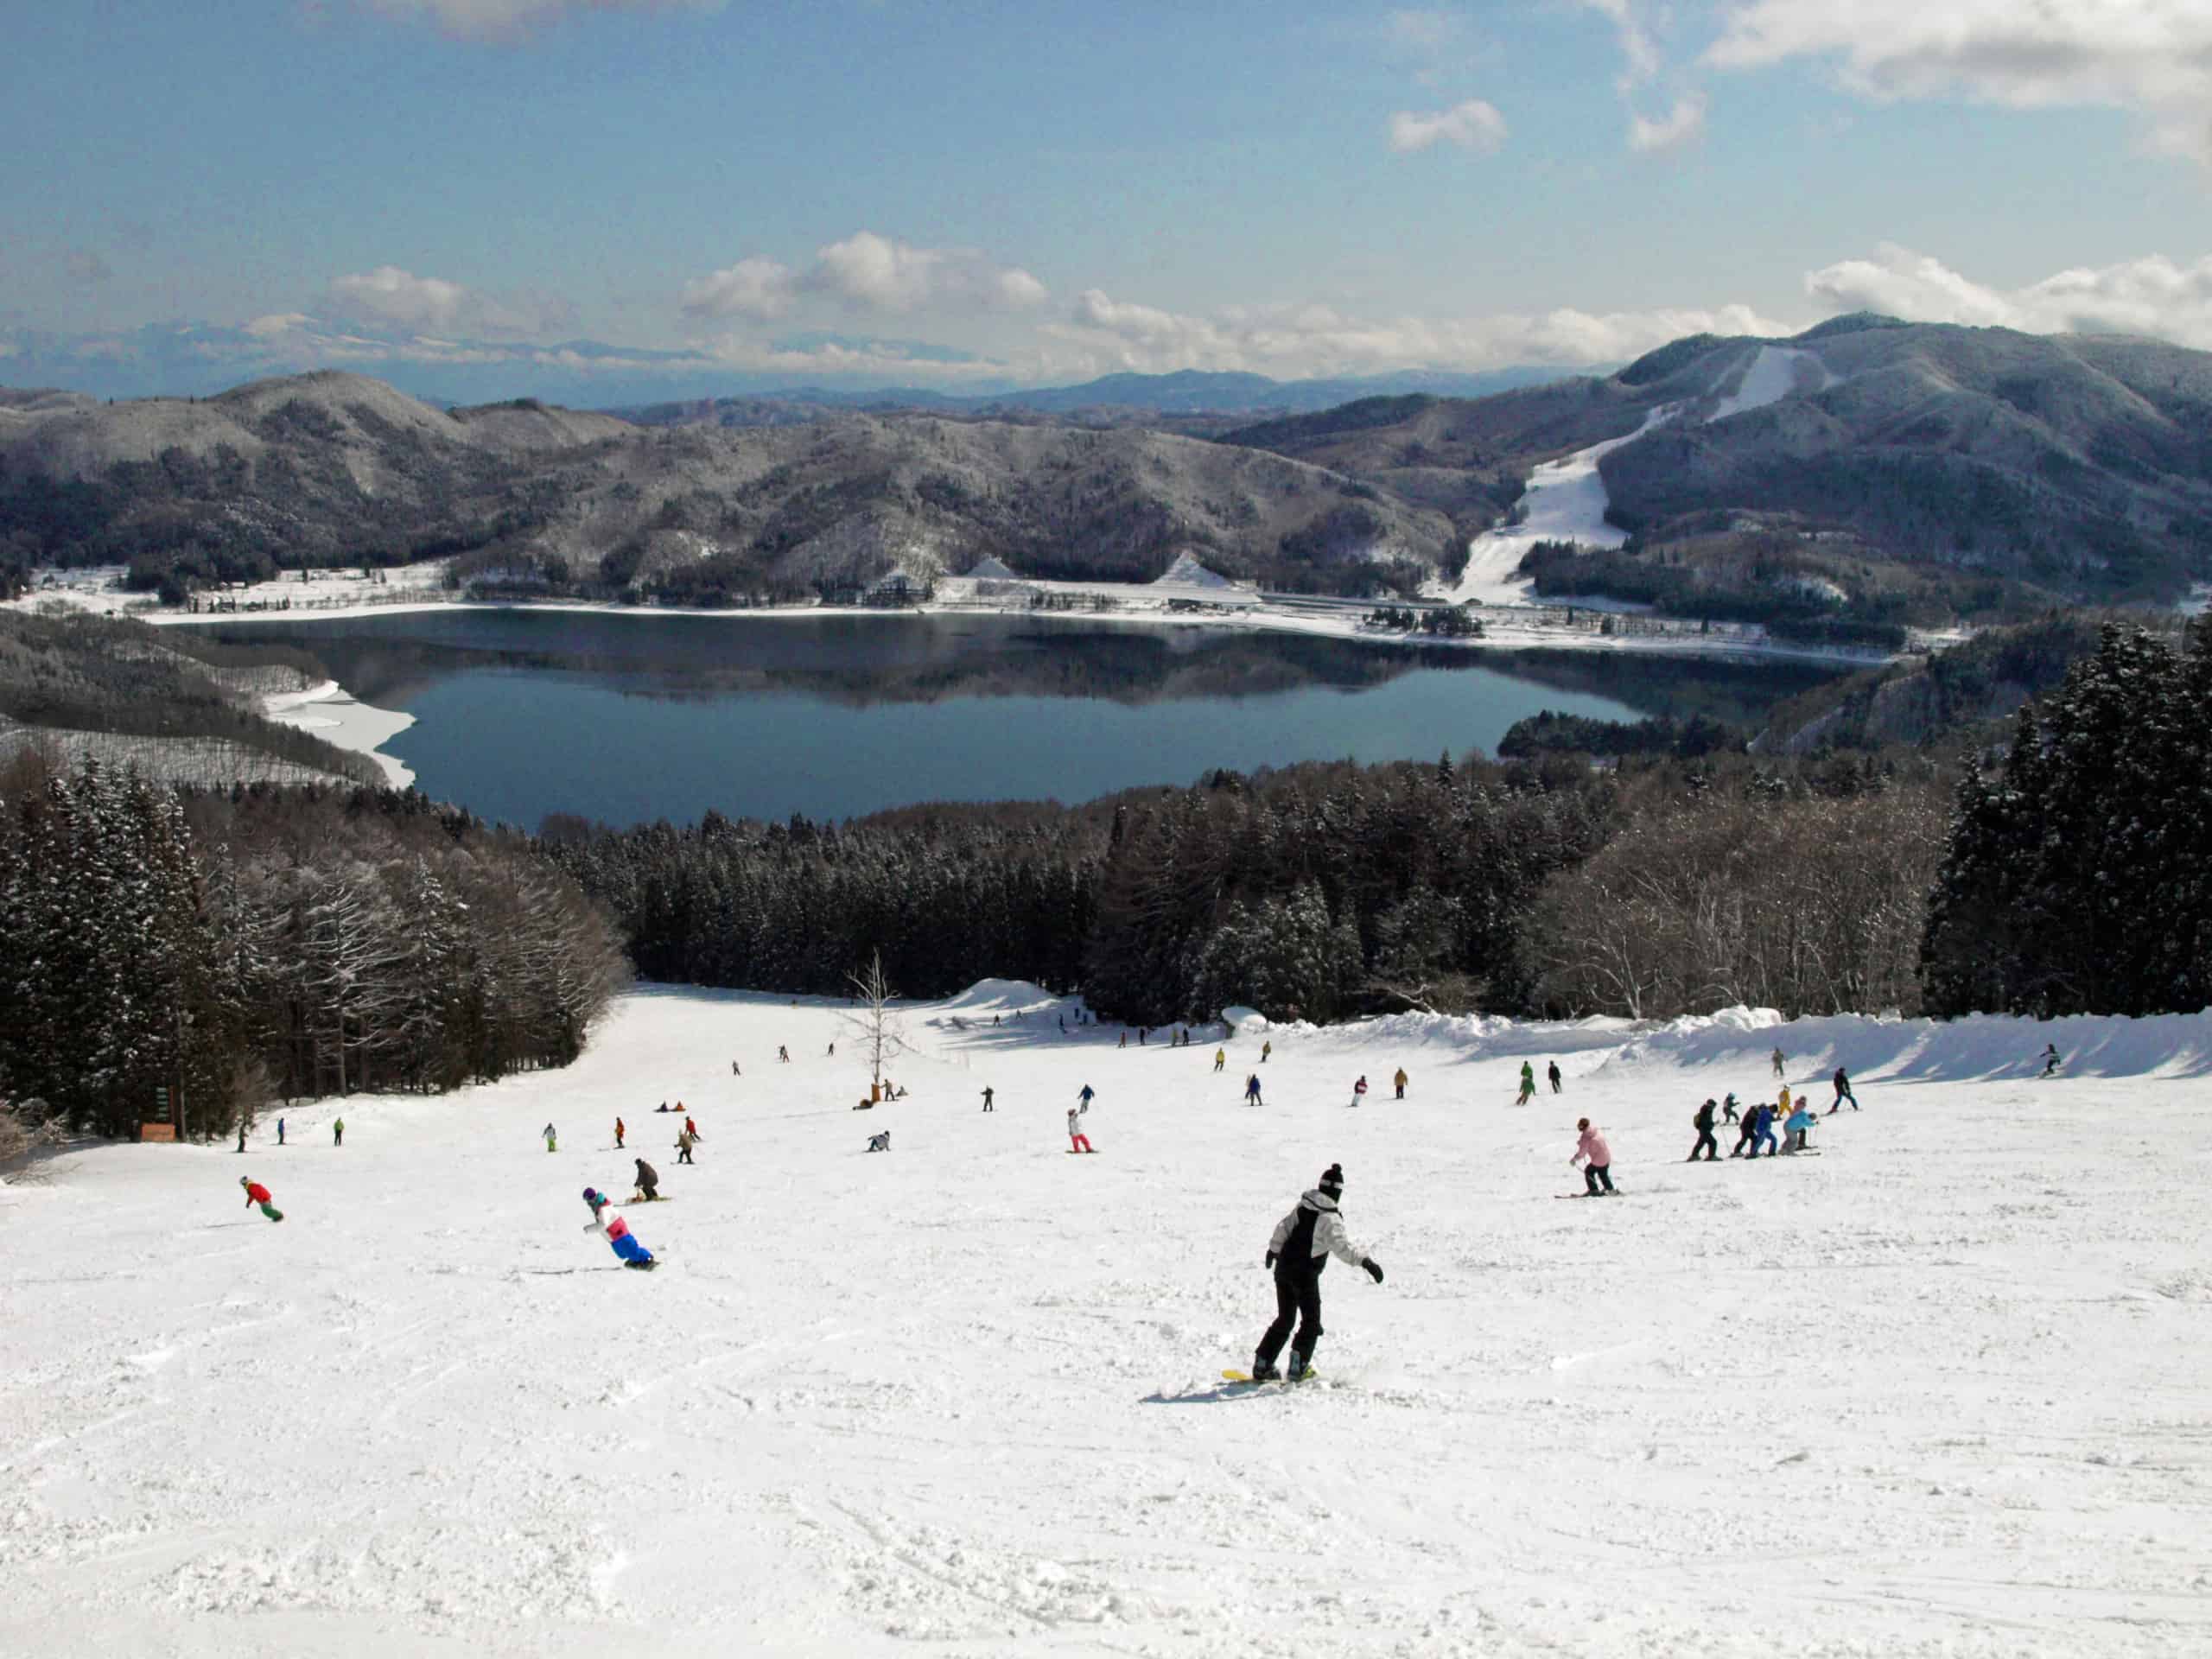 Sanosaka: one of the smaller resorts in the Hakuba Valley with beautiful views over Lake Aoki and perfect intermediate terrain.